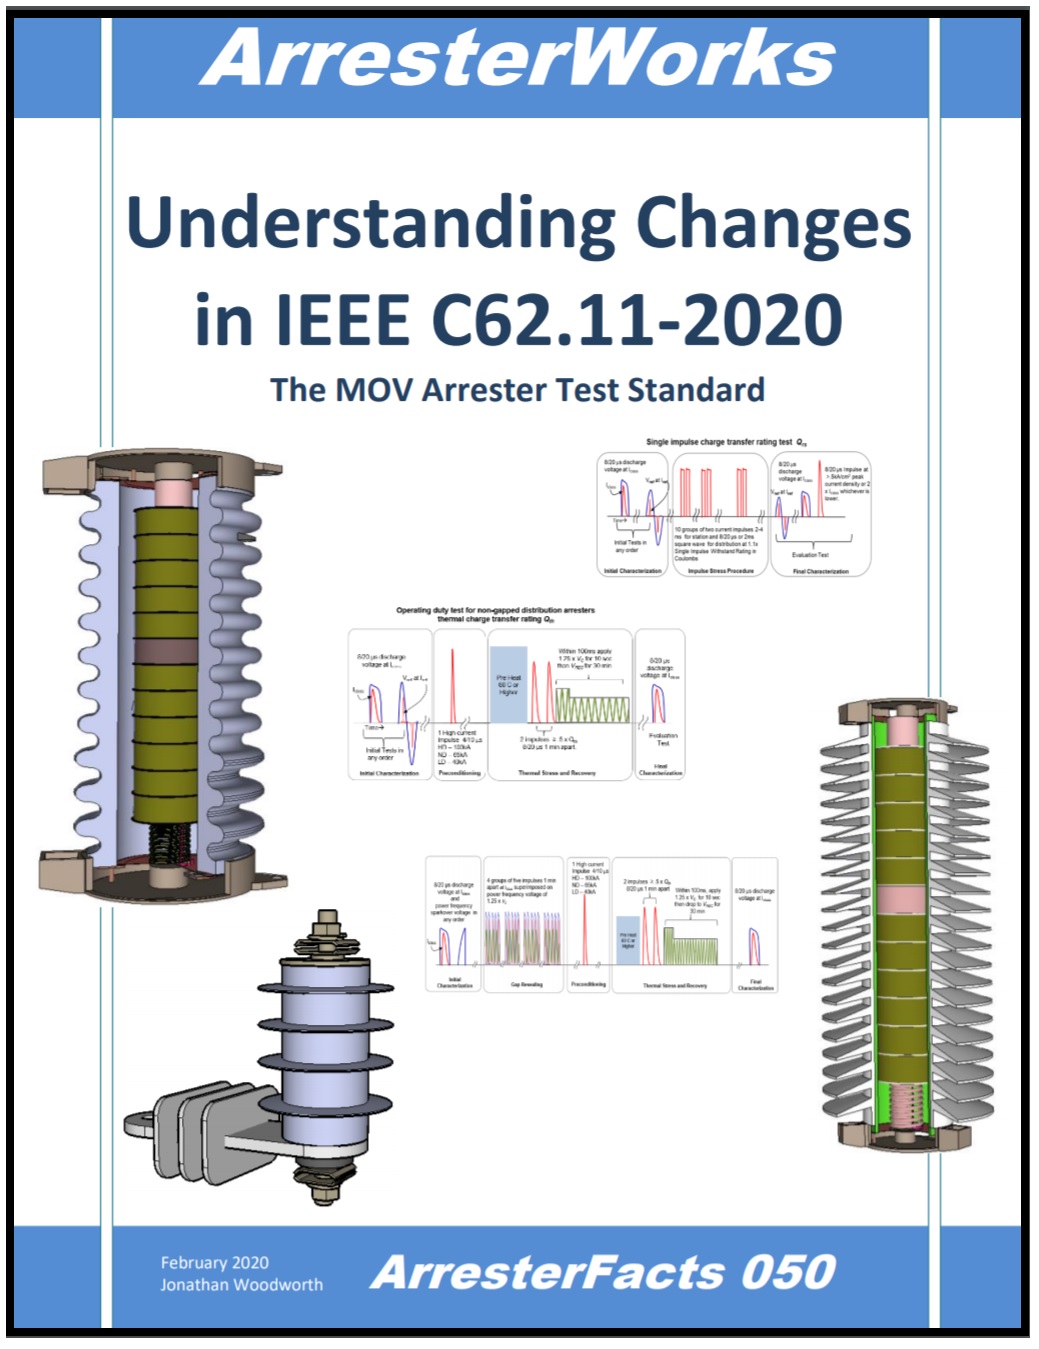 IEEE C62.11-2020 Test Changes	